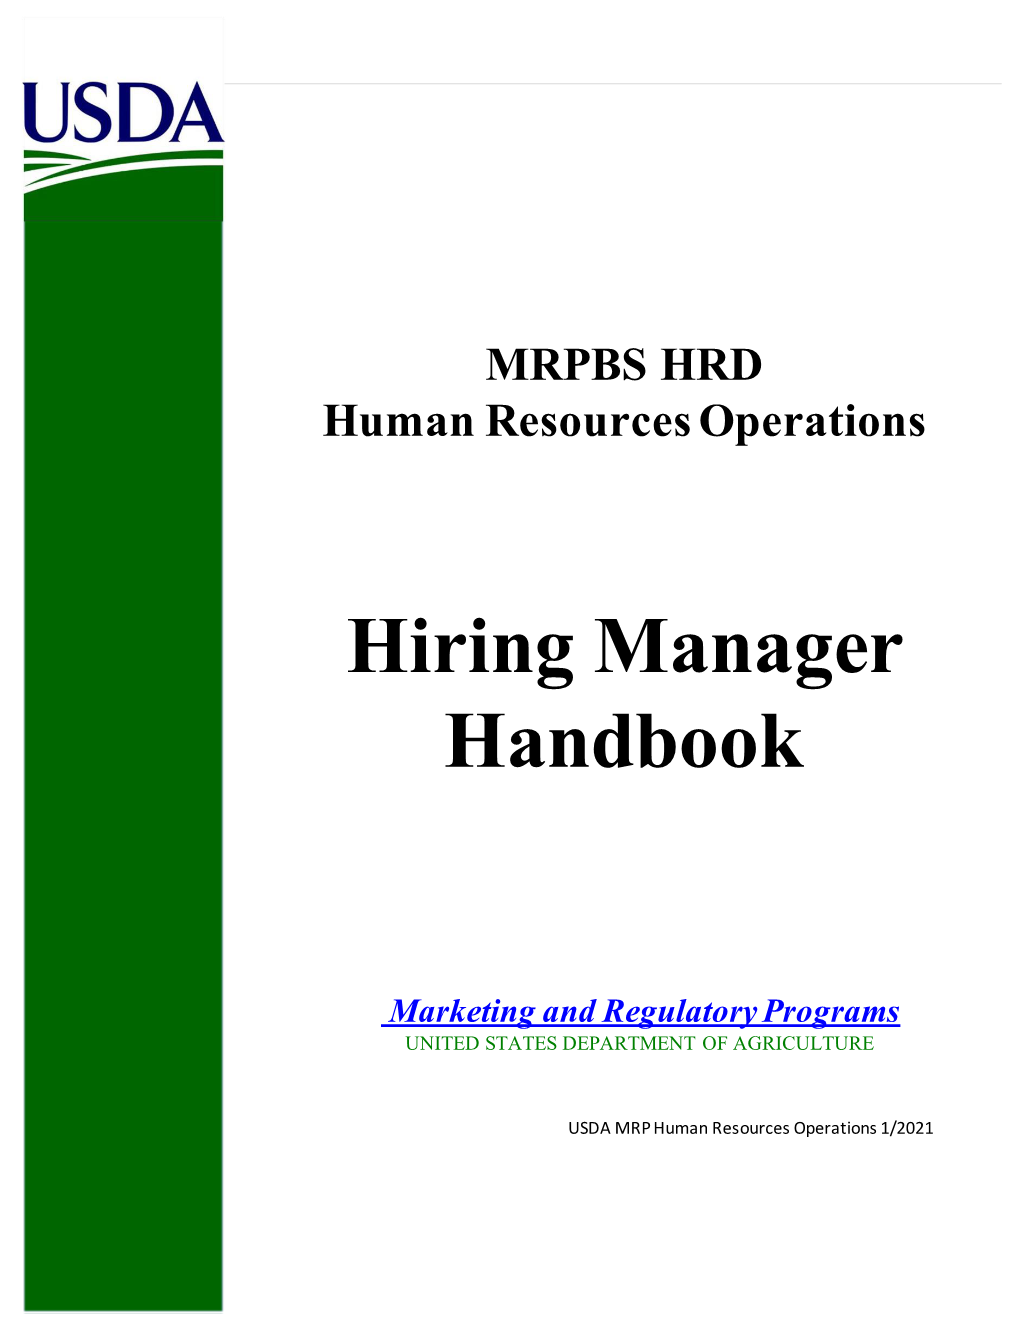 Hiring Manager Handbook